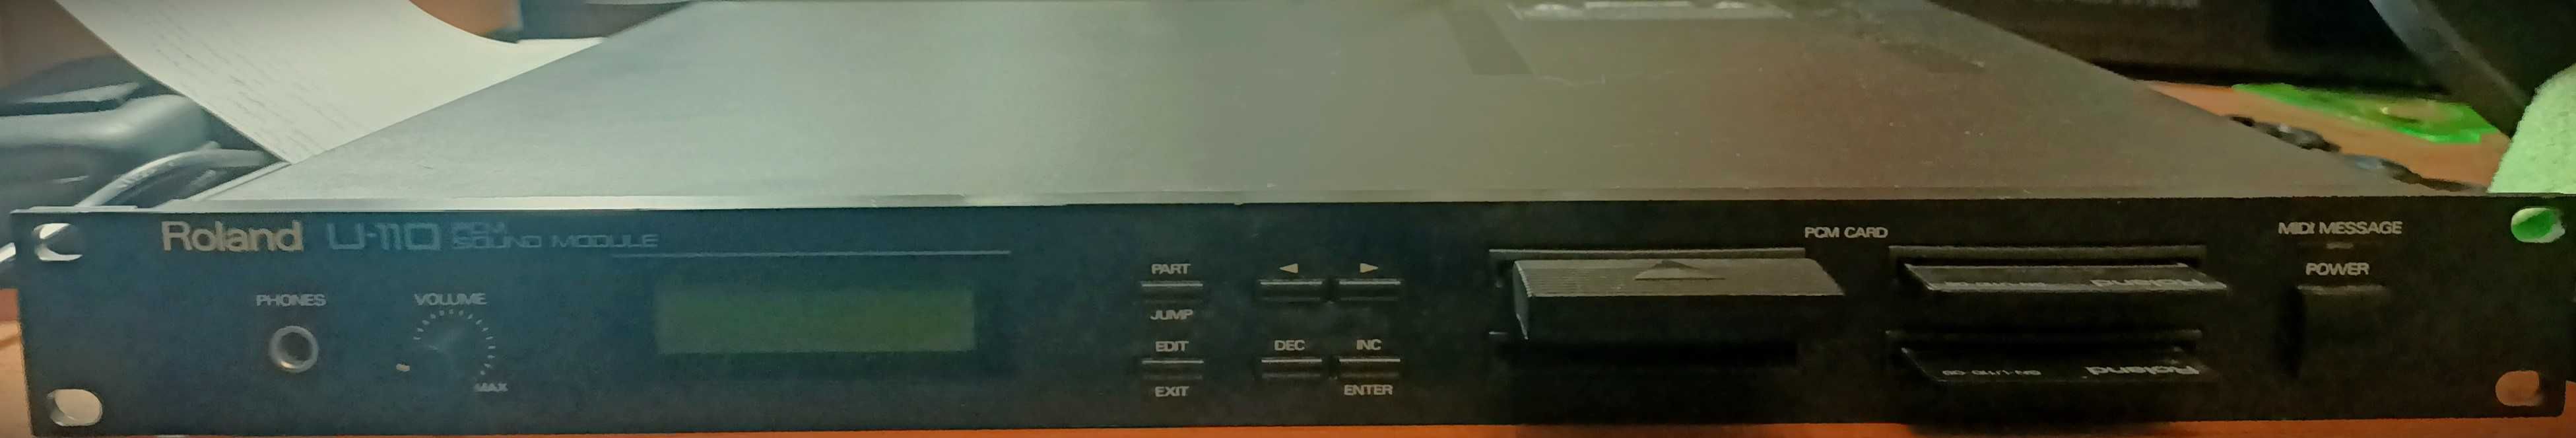 Roland U-110 PCM Sound module - syntezator rack